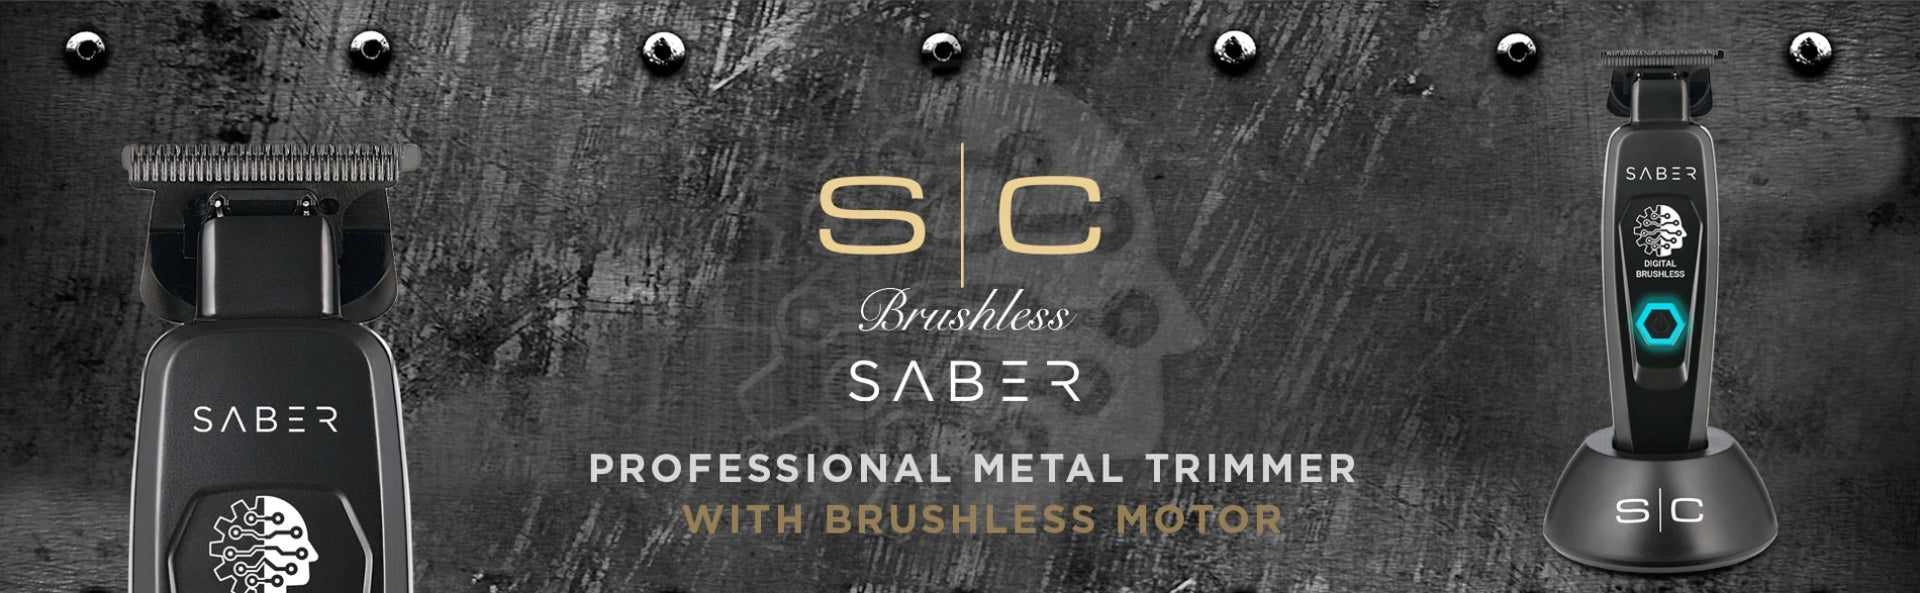 SABER Professional Full Metal Body Digital Brushless Motor Cordless Hair Trimmer in Black on BuyBarber.com